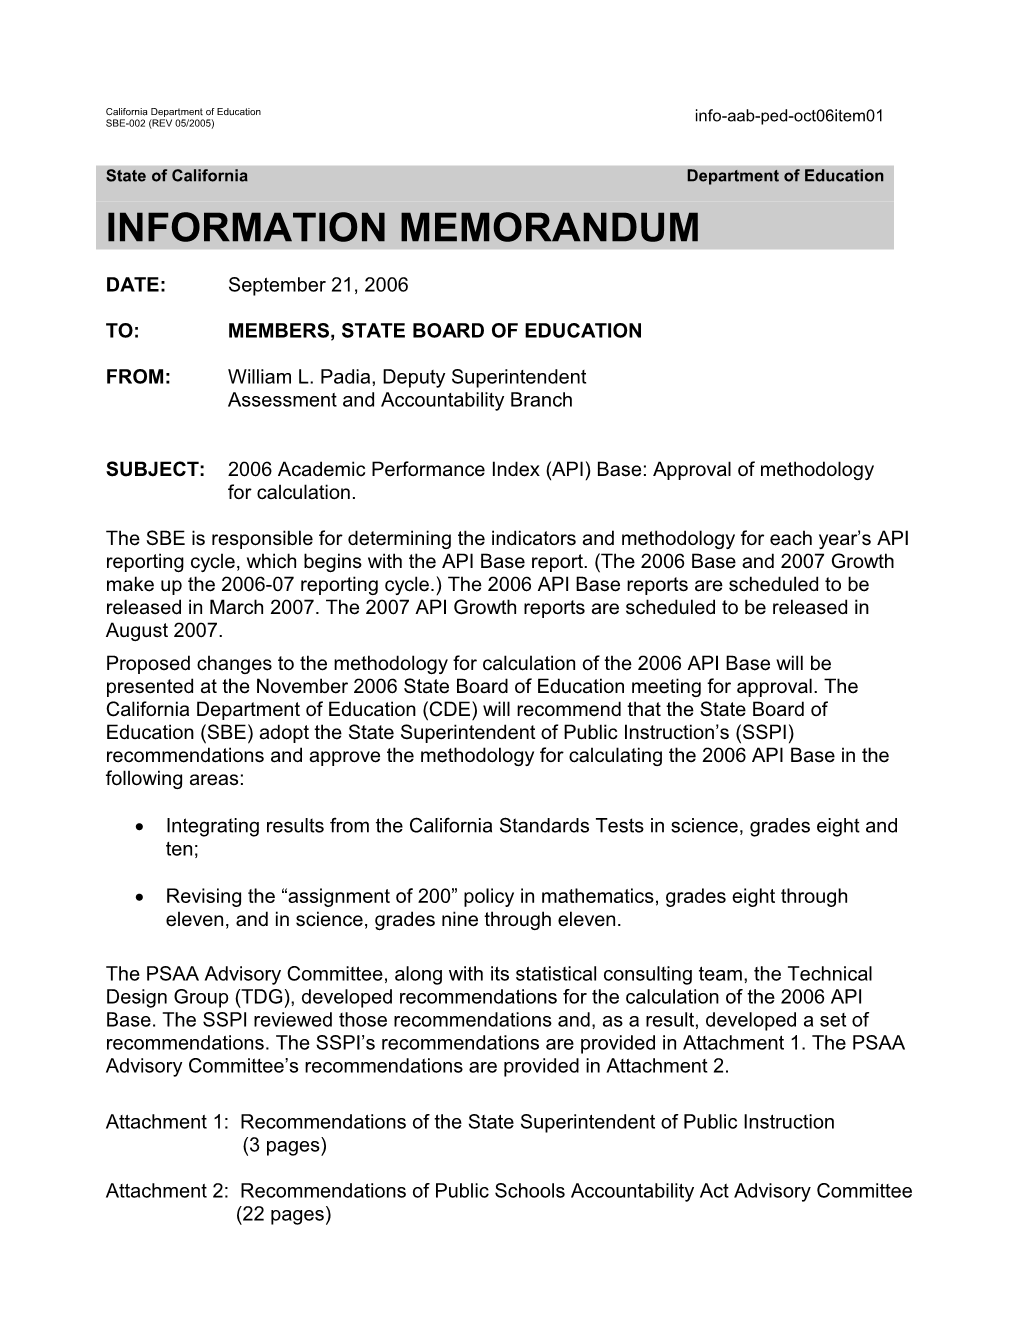 October 2006 PED Item 1 - Information Memorandum (CA State Board of Education)